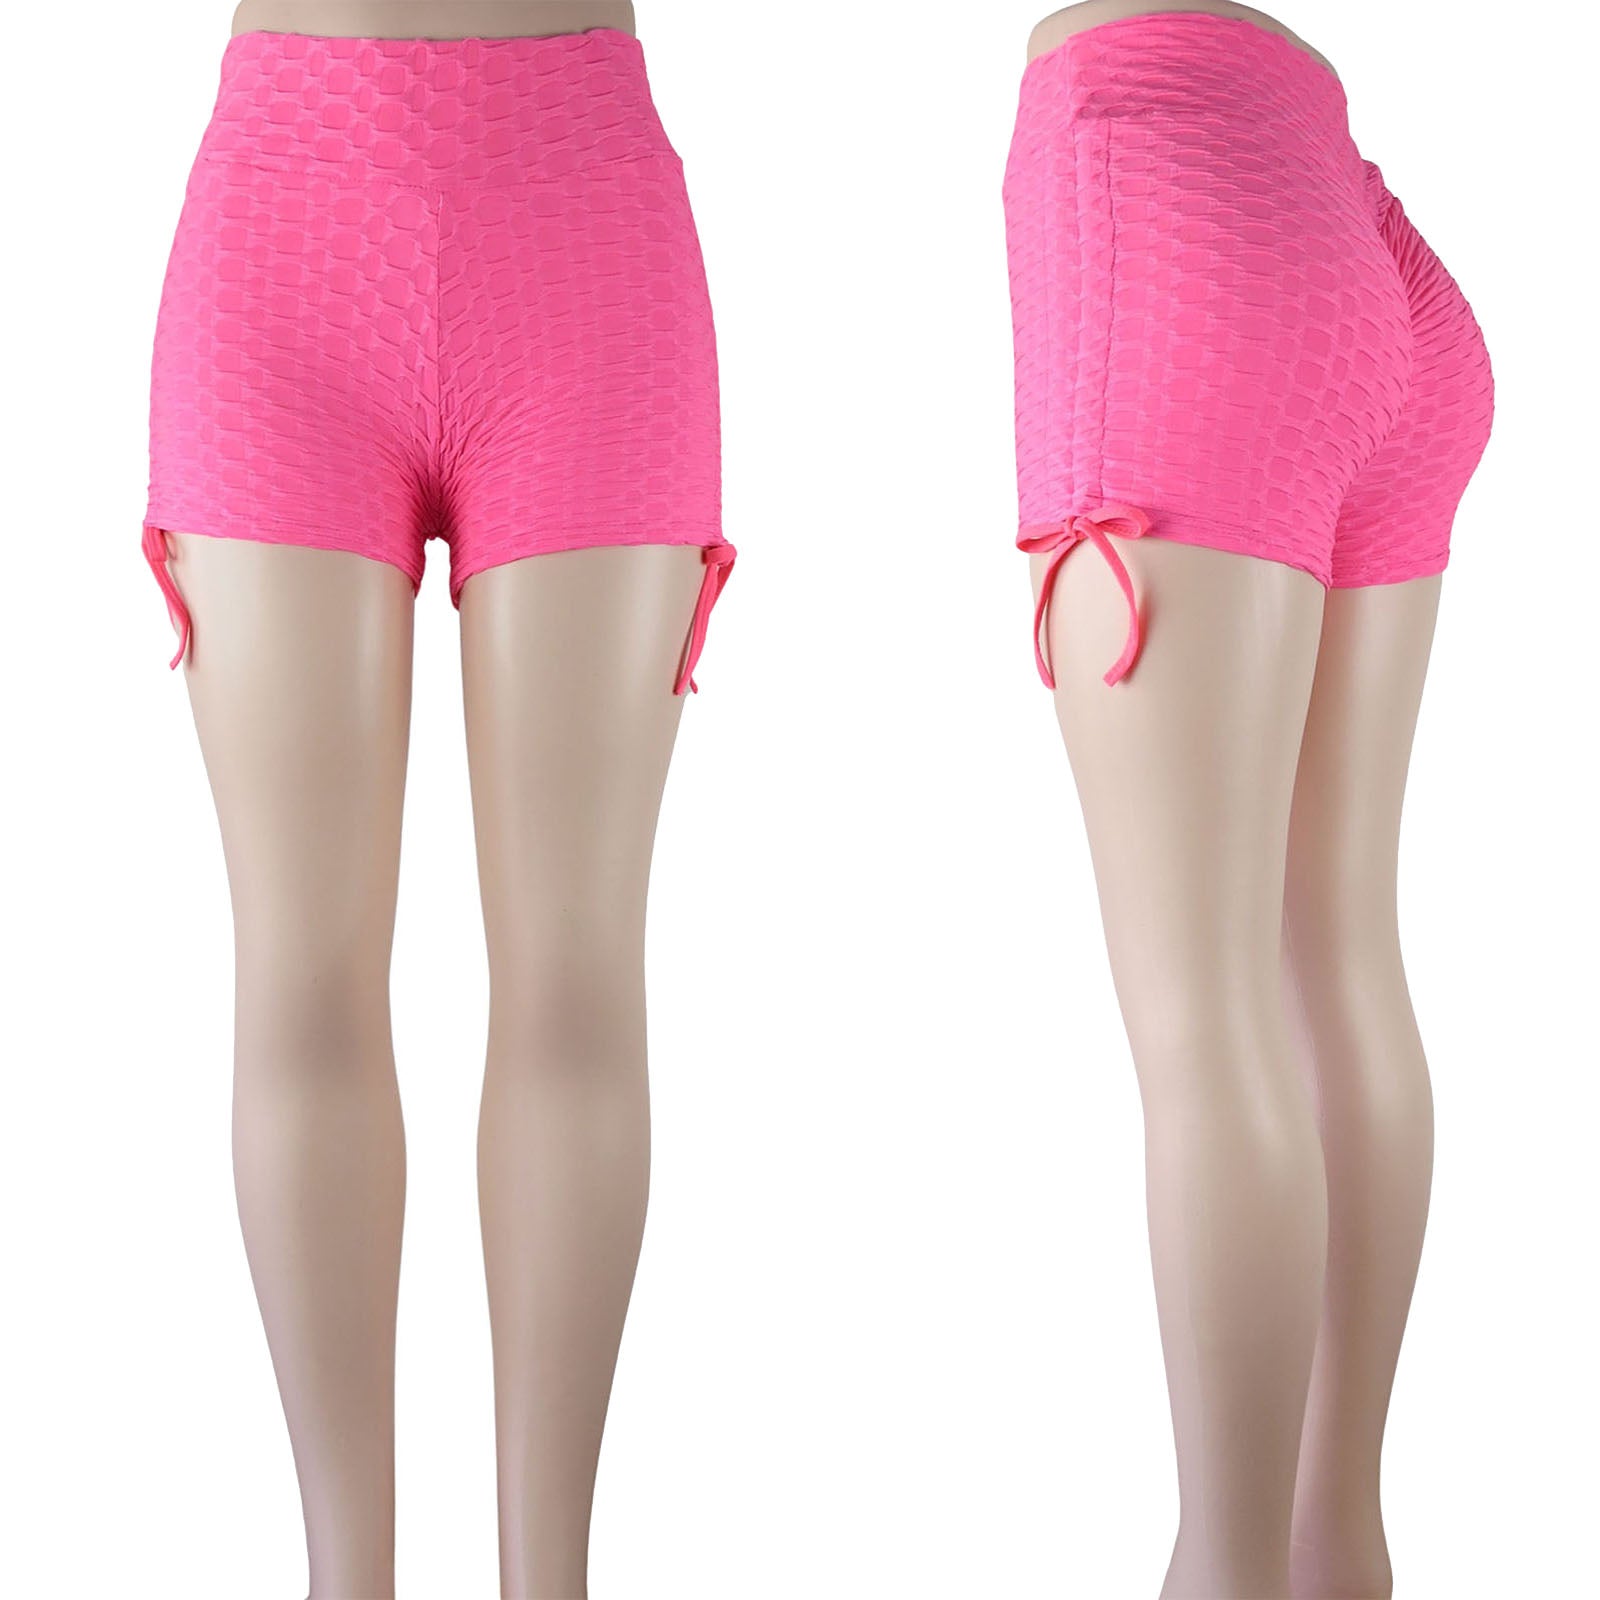 Scrunch Bum Scrunch Shorts & Shorts - Shipping From The US